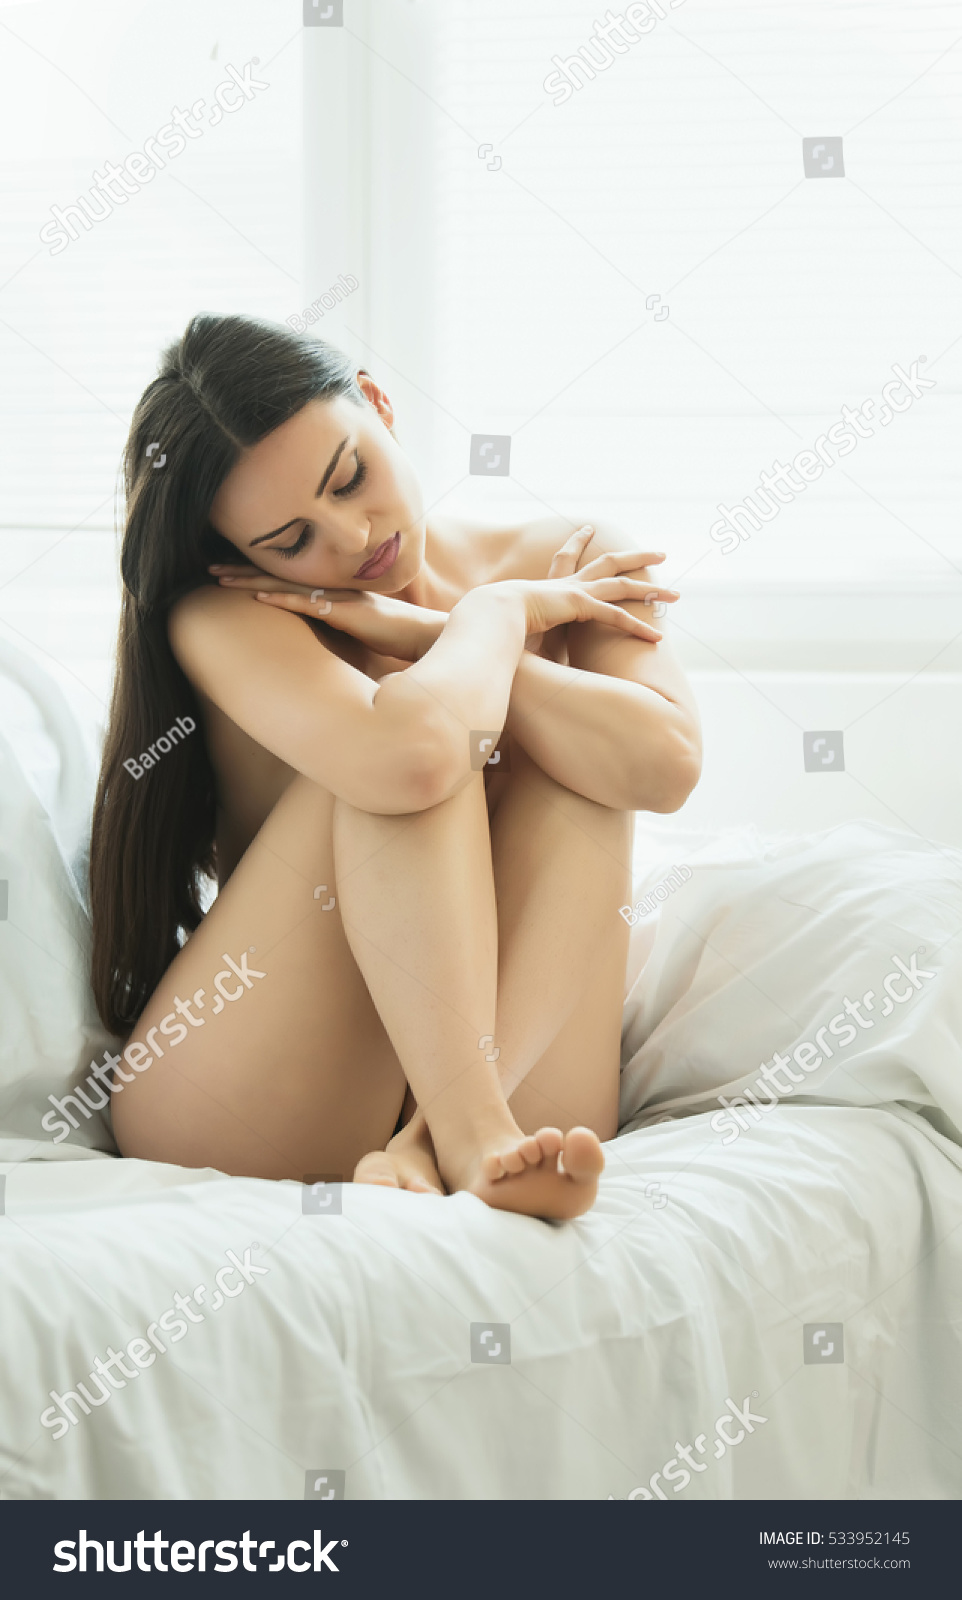 beautiful girl nude on bed